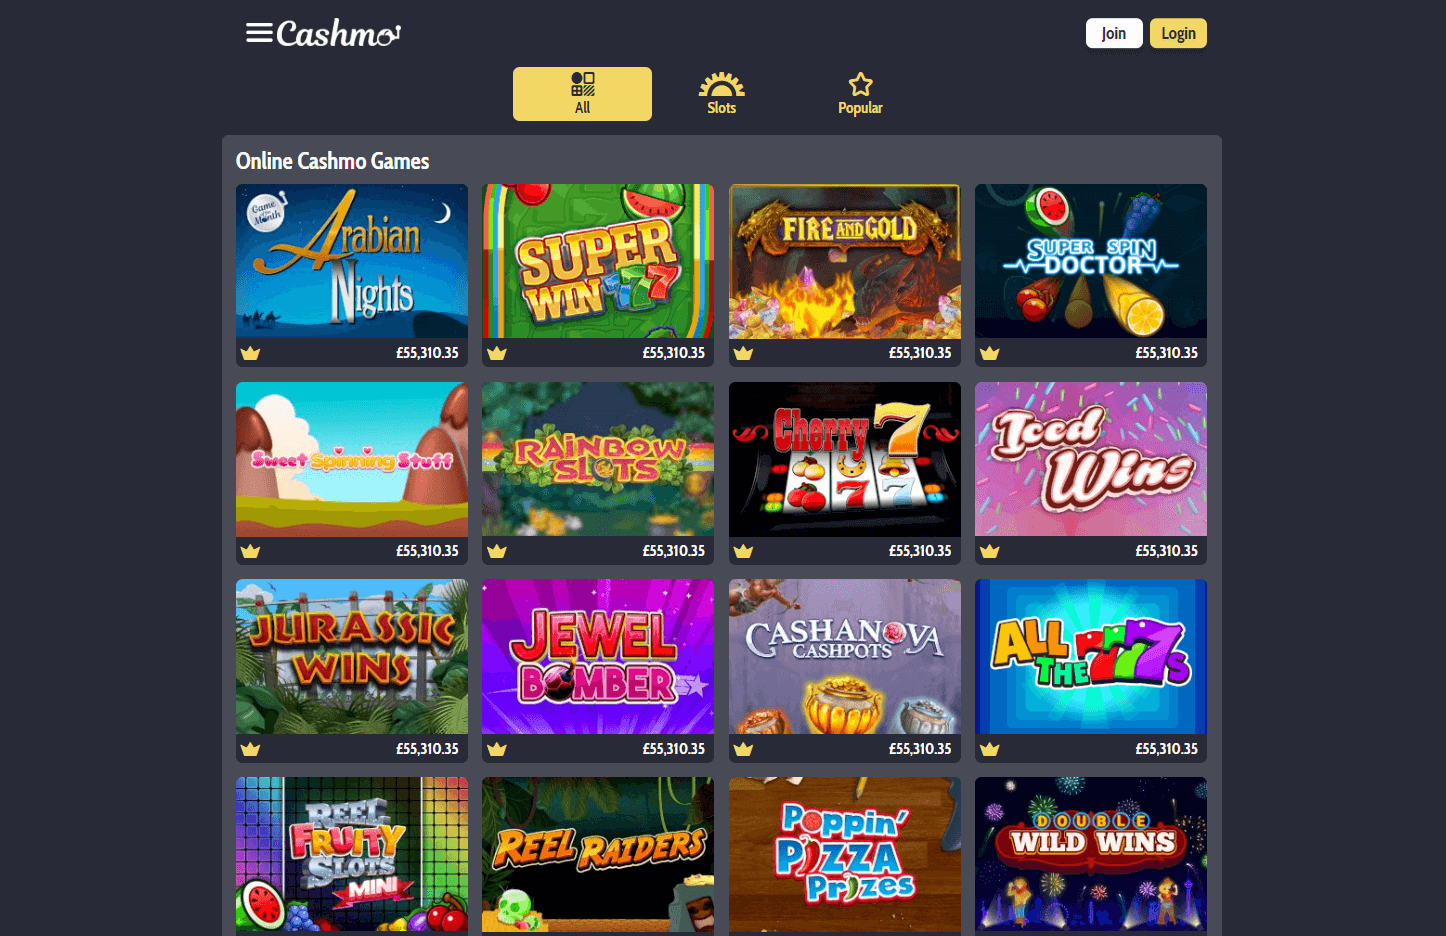 Play slots with free spins bonus at Cashmo Casino